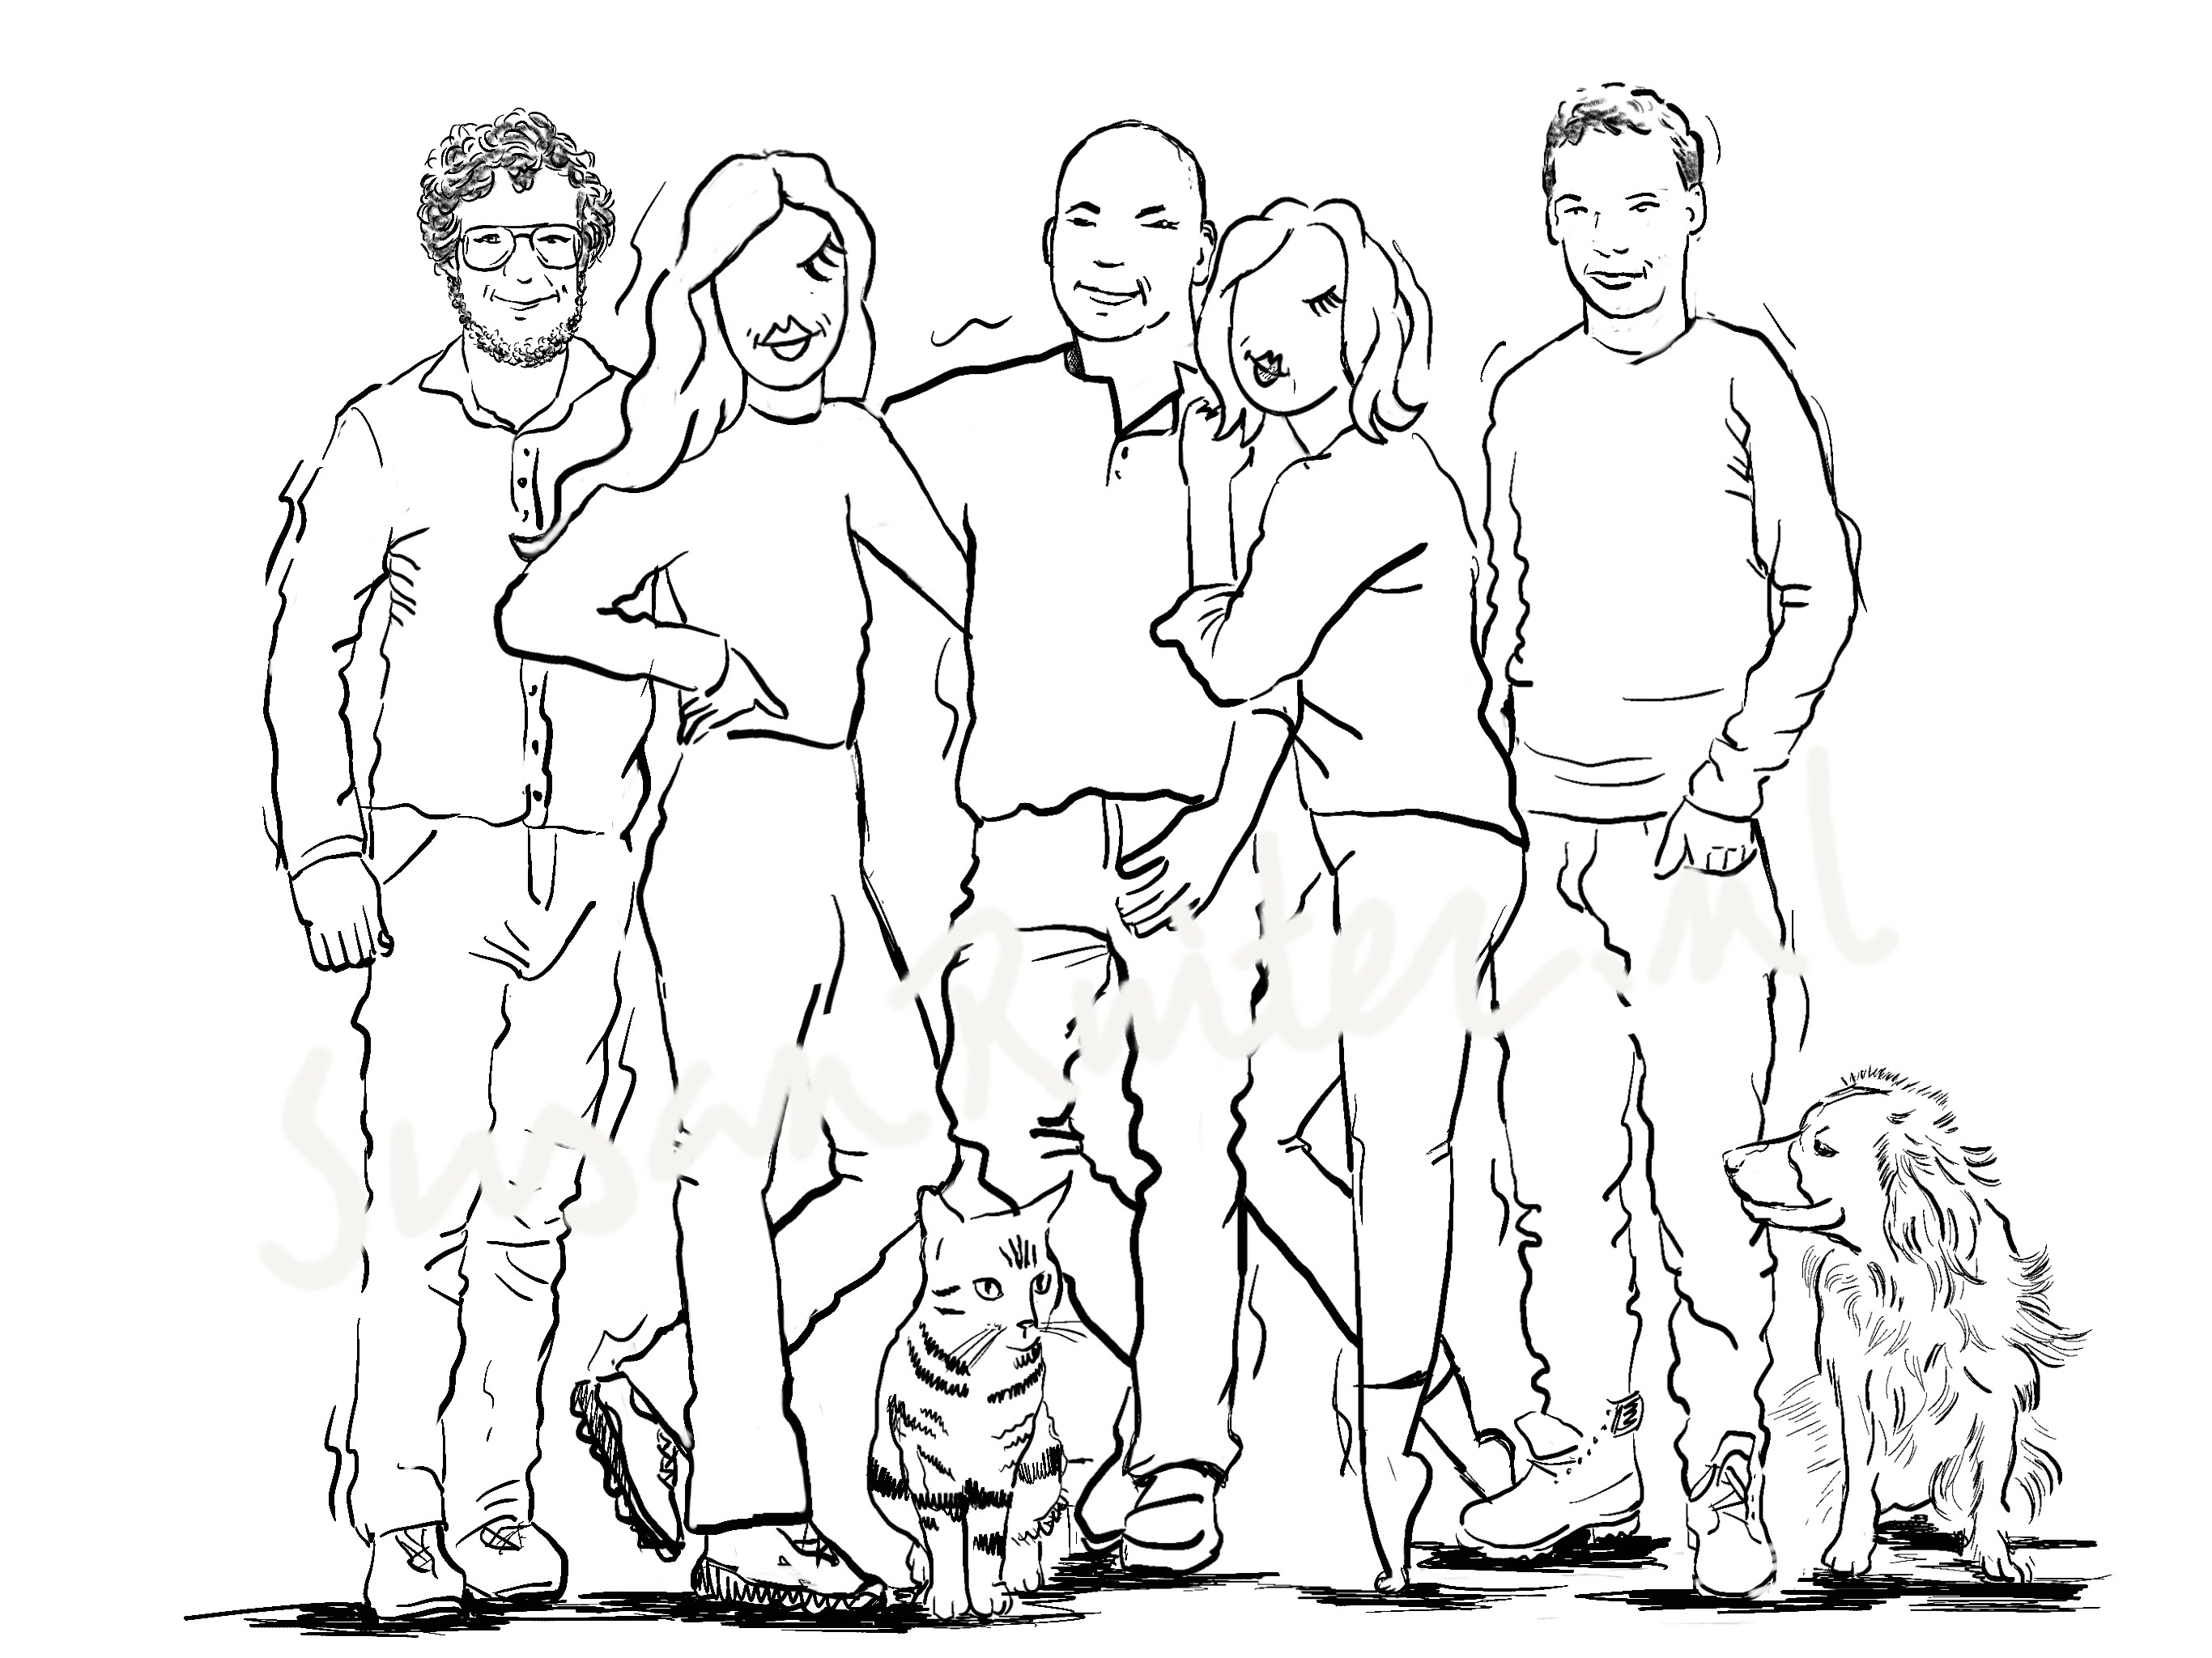 Family portrait as ART